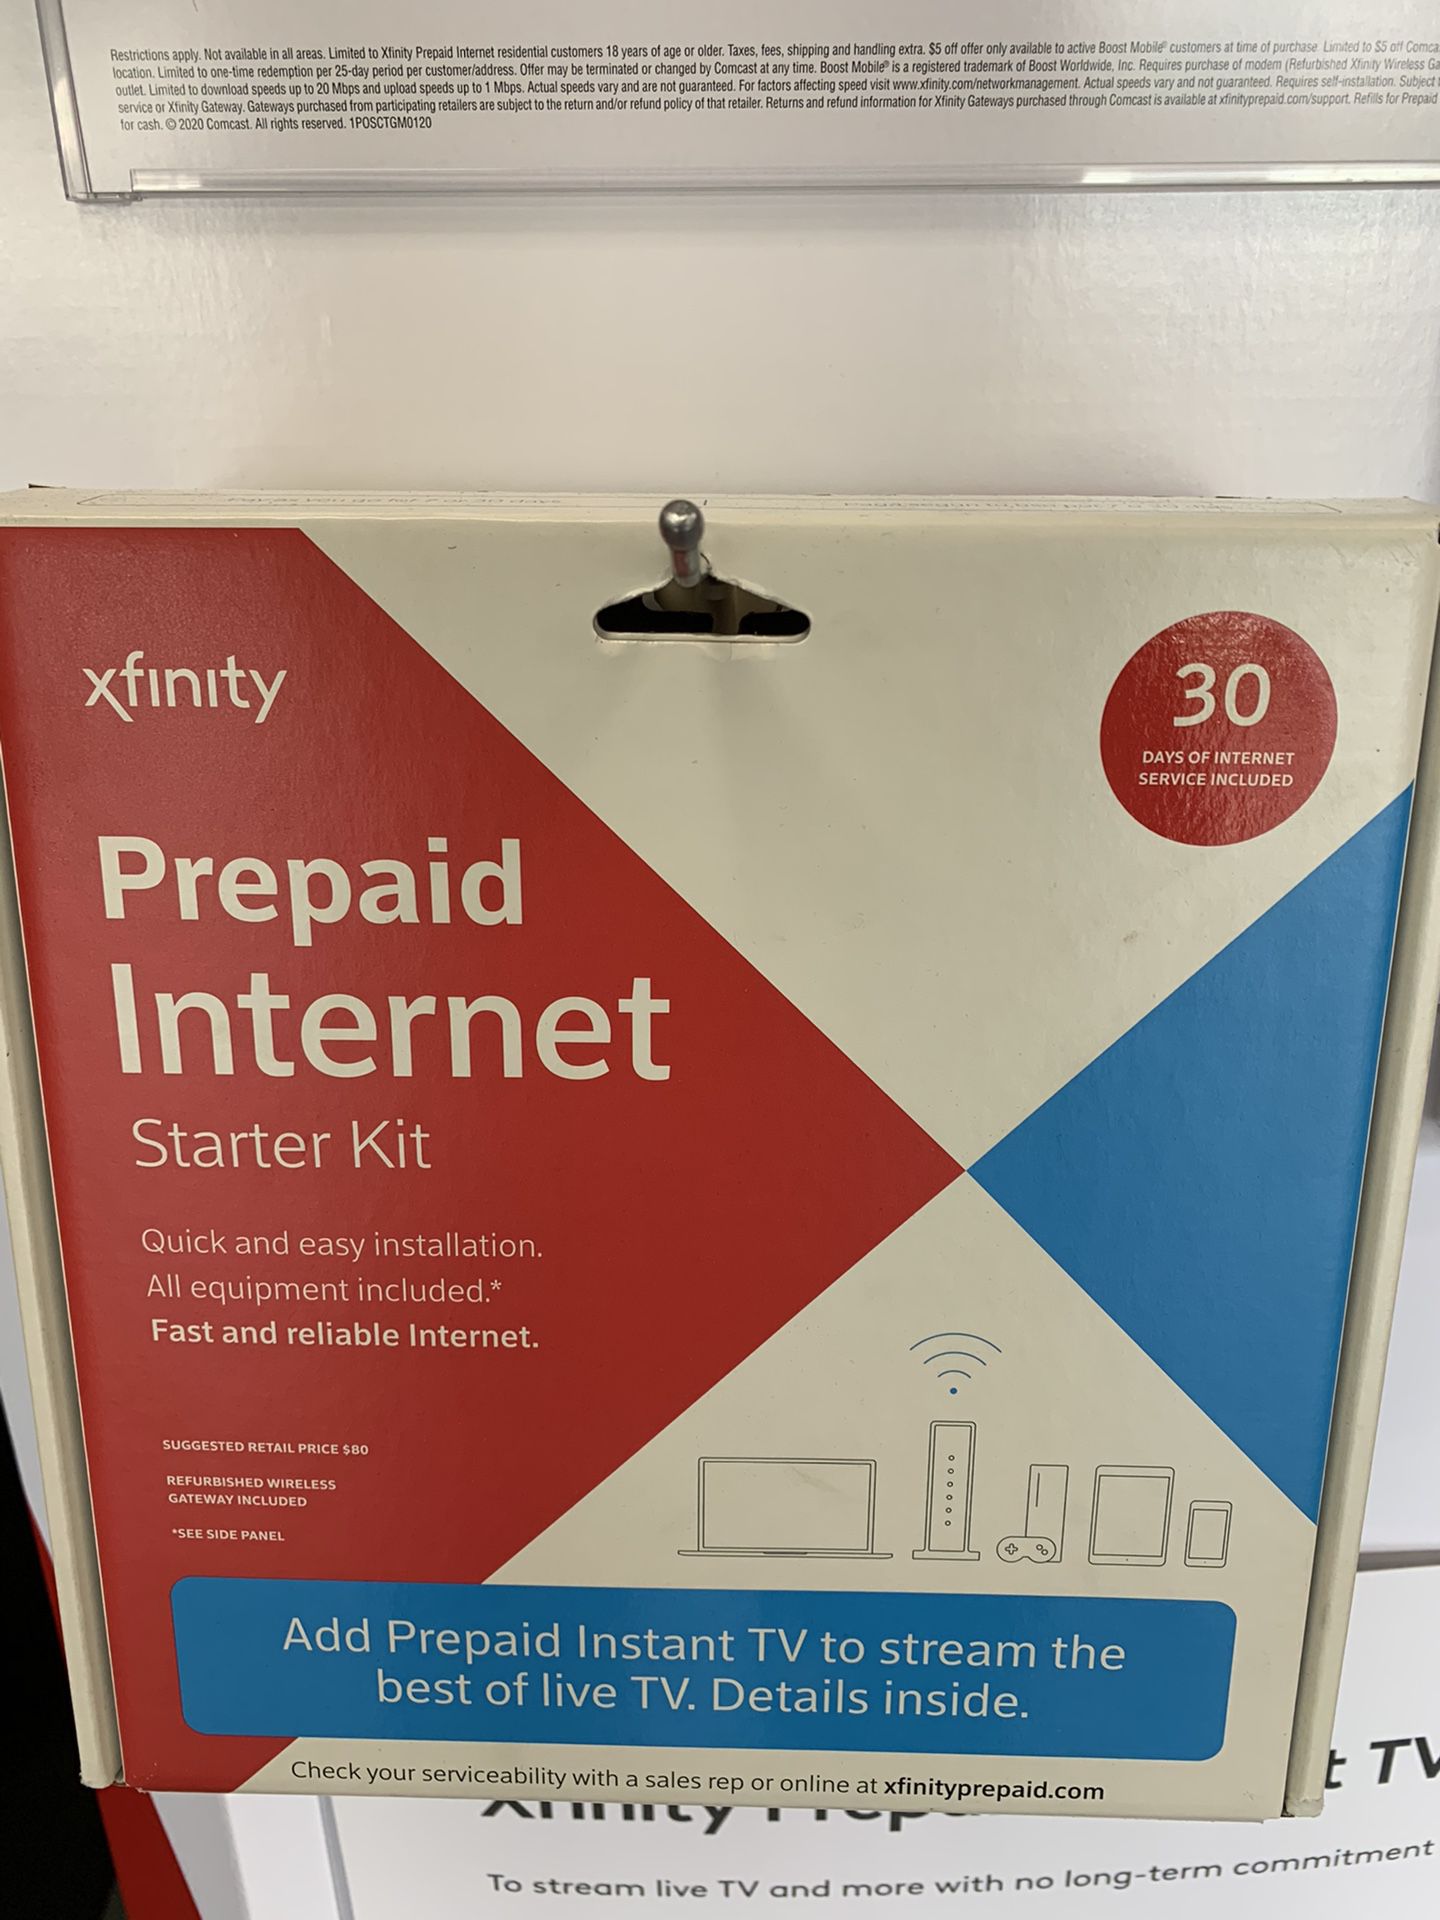 Xfinity prepaid internet kit